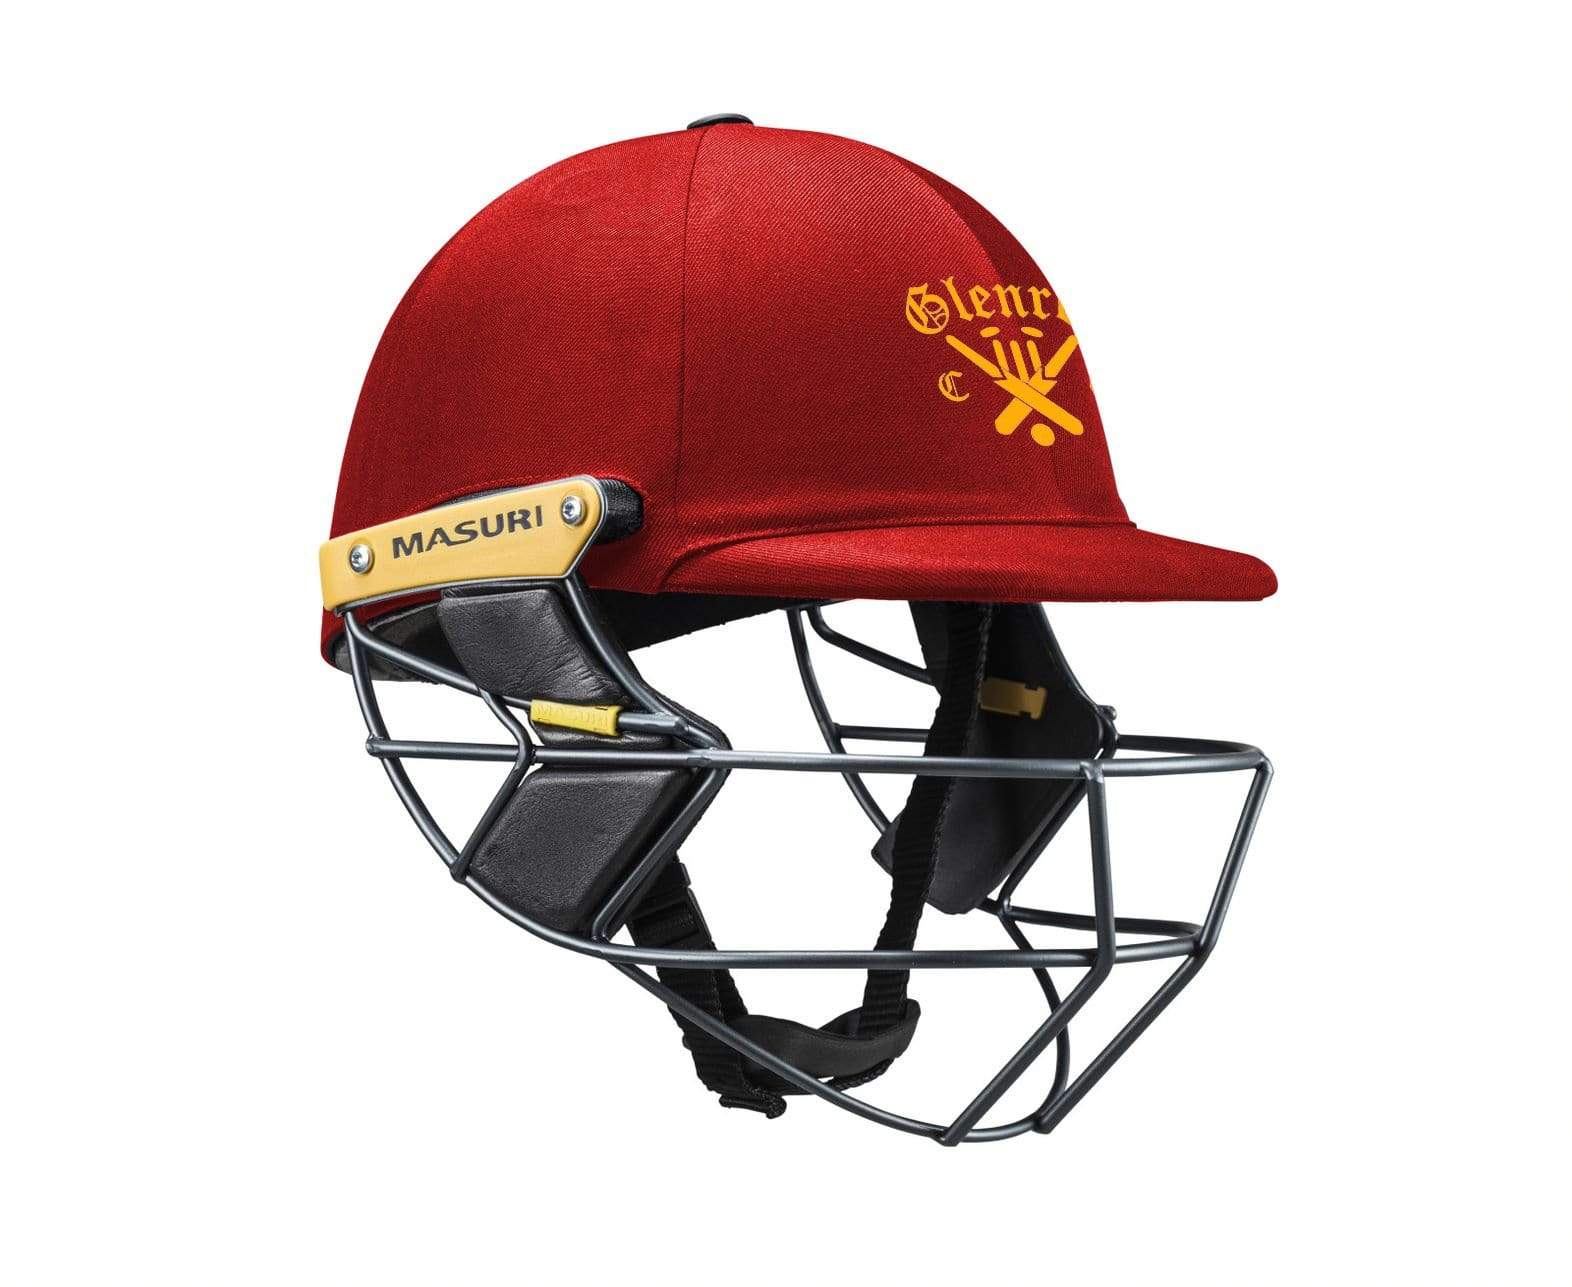 Masuri Club Helmet Glenroy Cricket Club Helmet